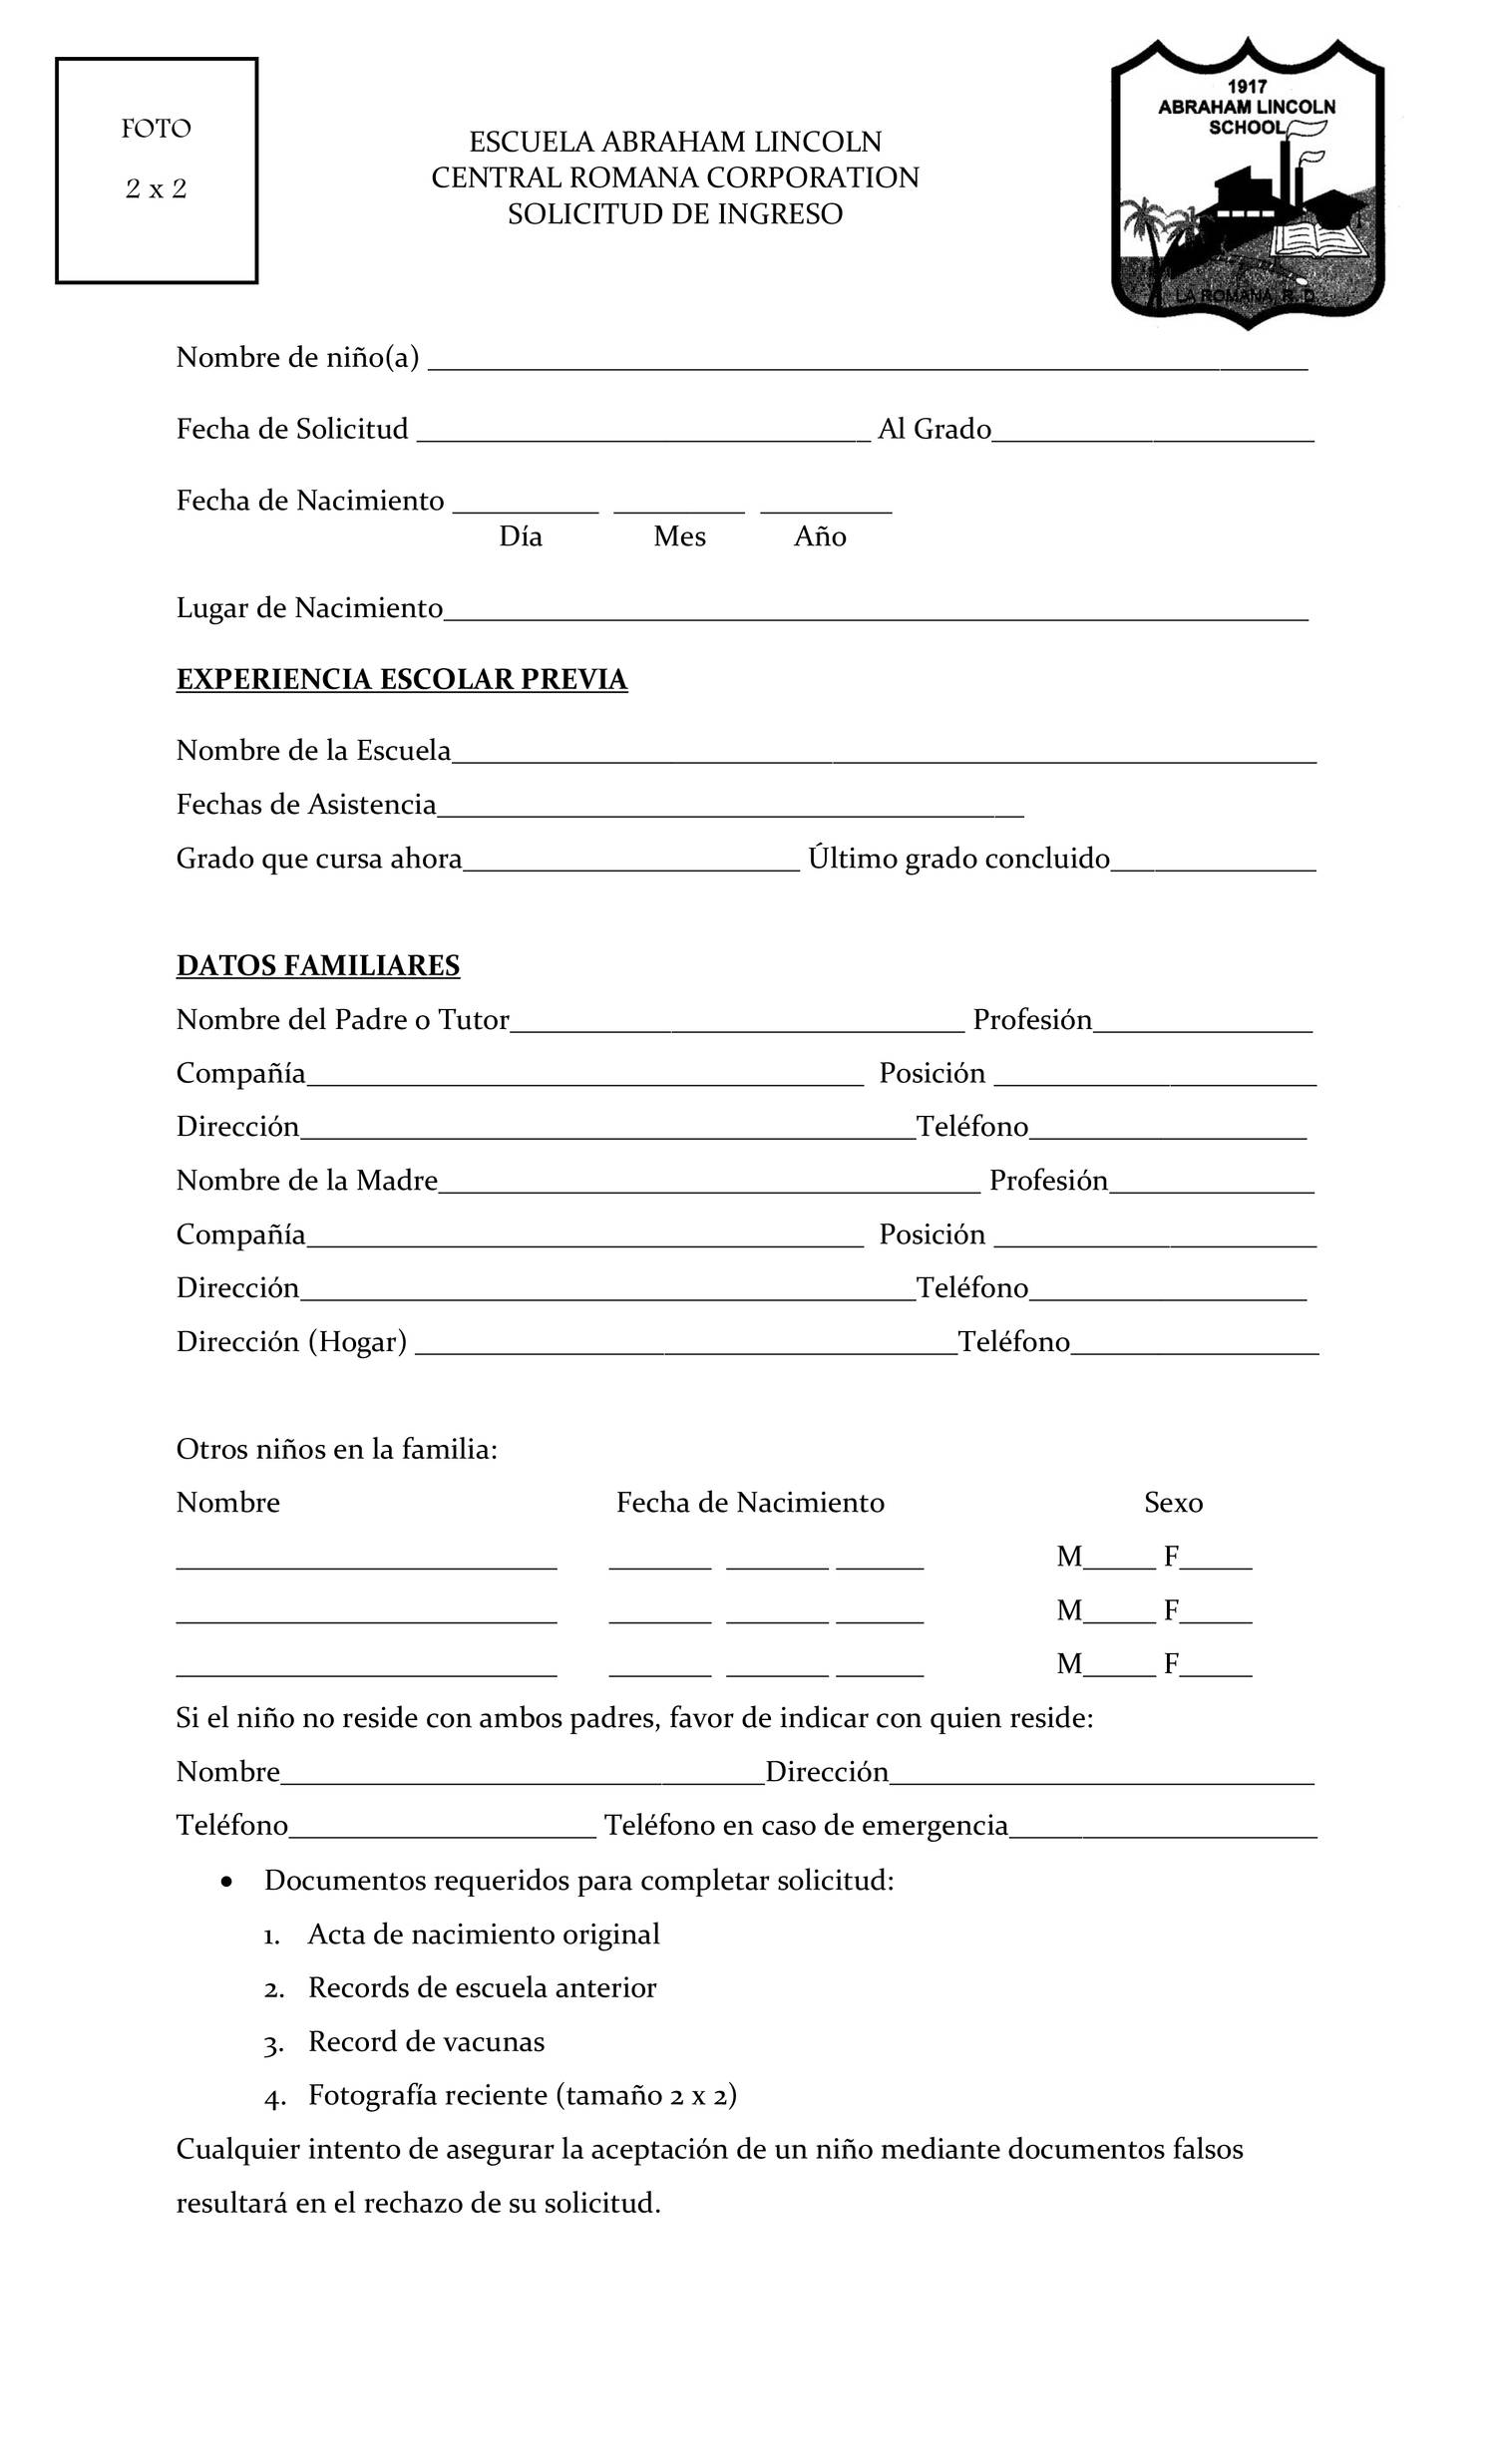 application-spanish-pdf-docdroid